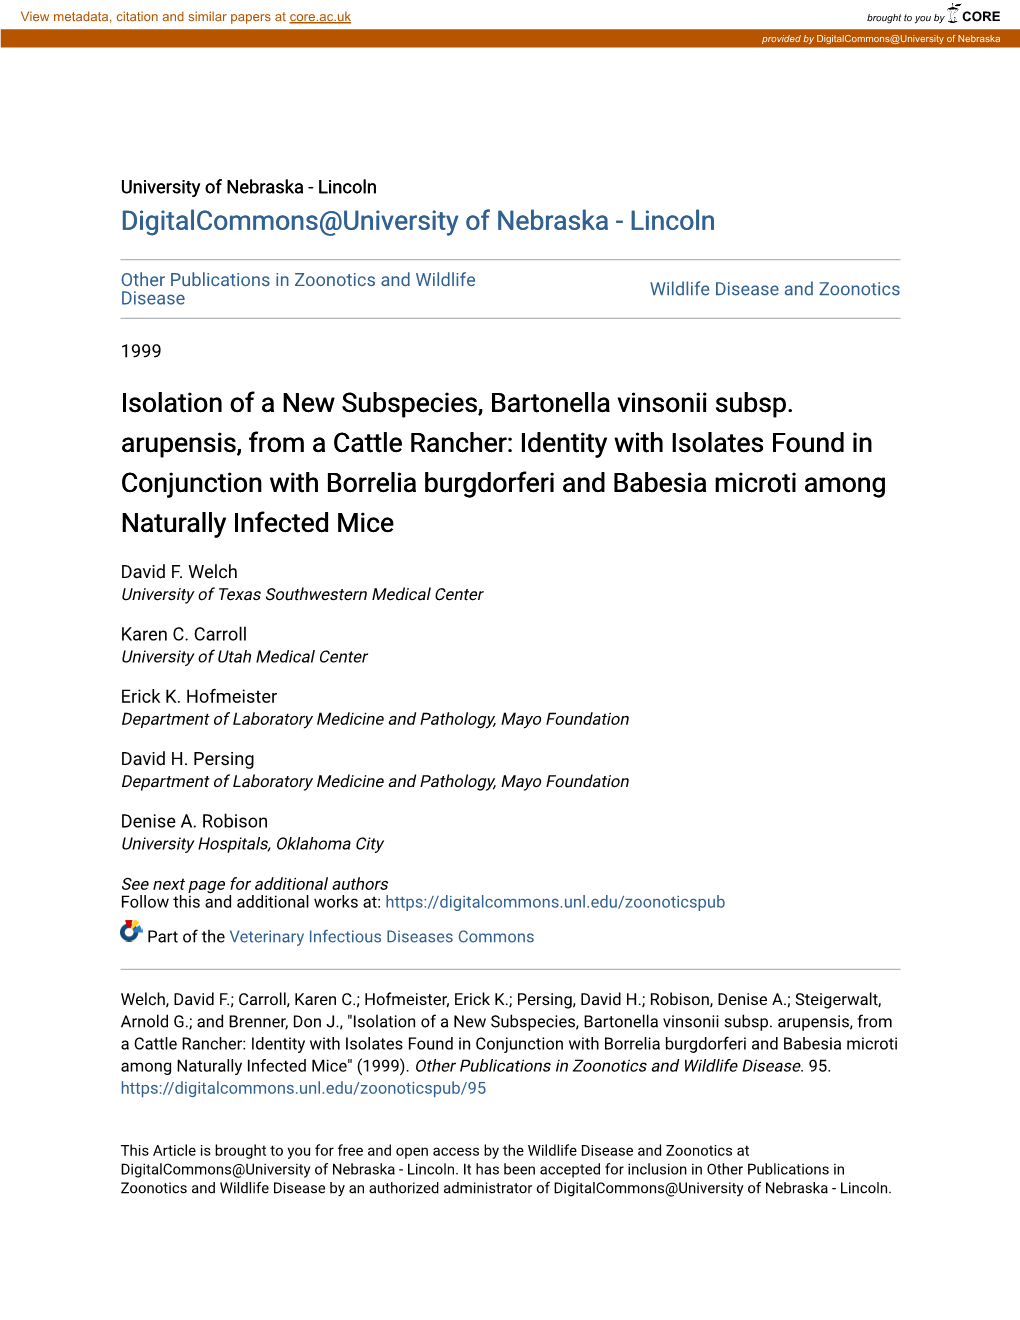 Isolation of a New Subspecies, Bartonella Vinsonii Subsp